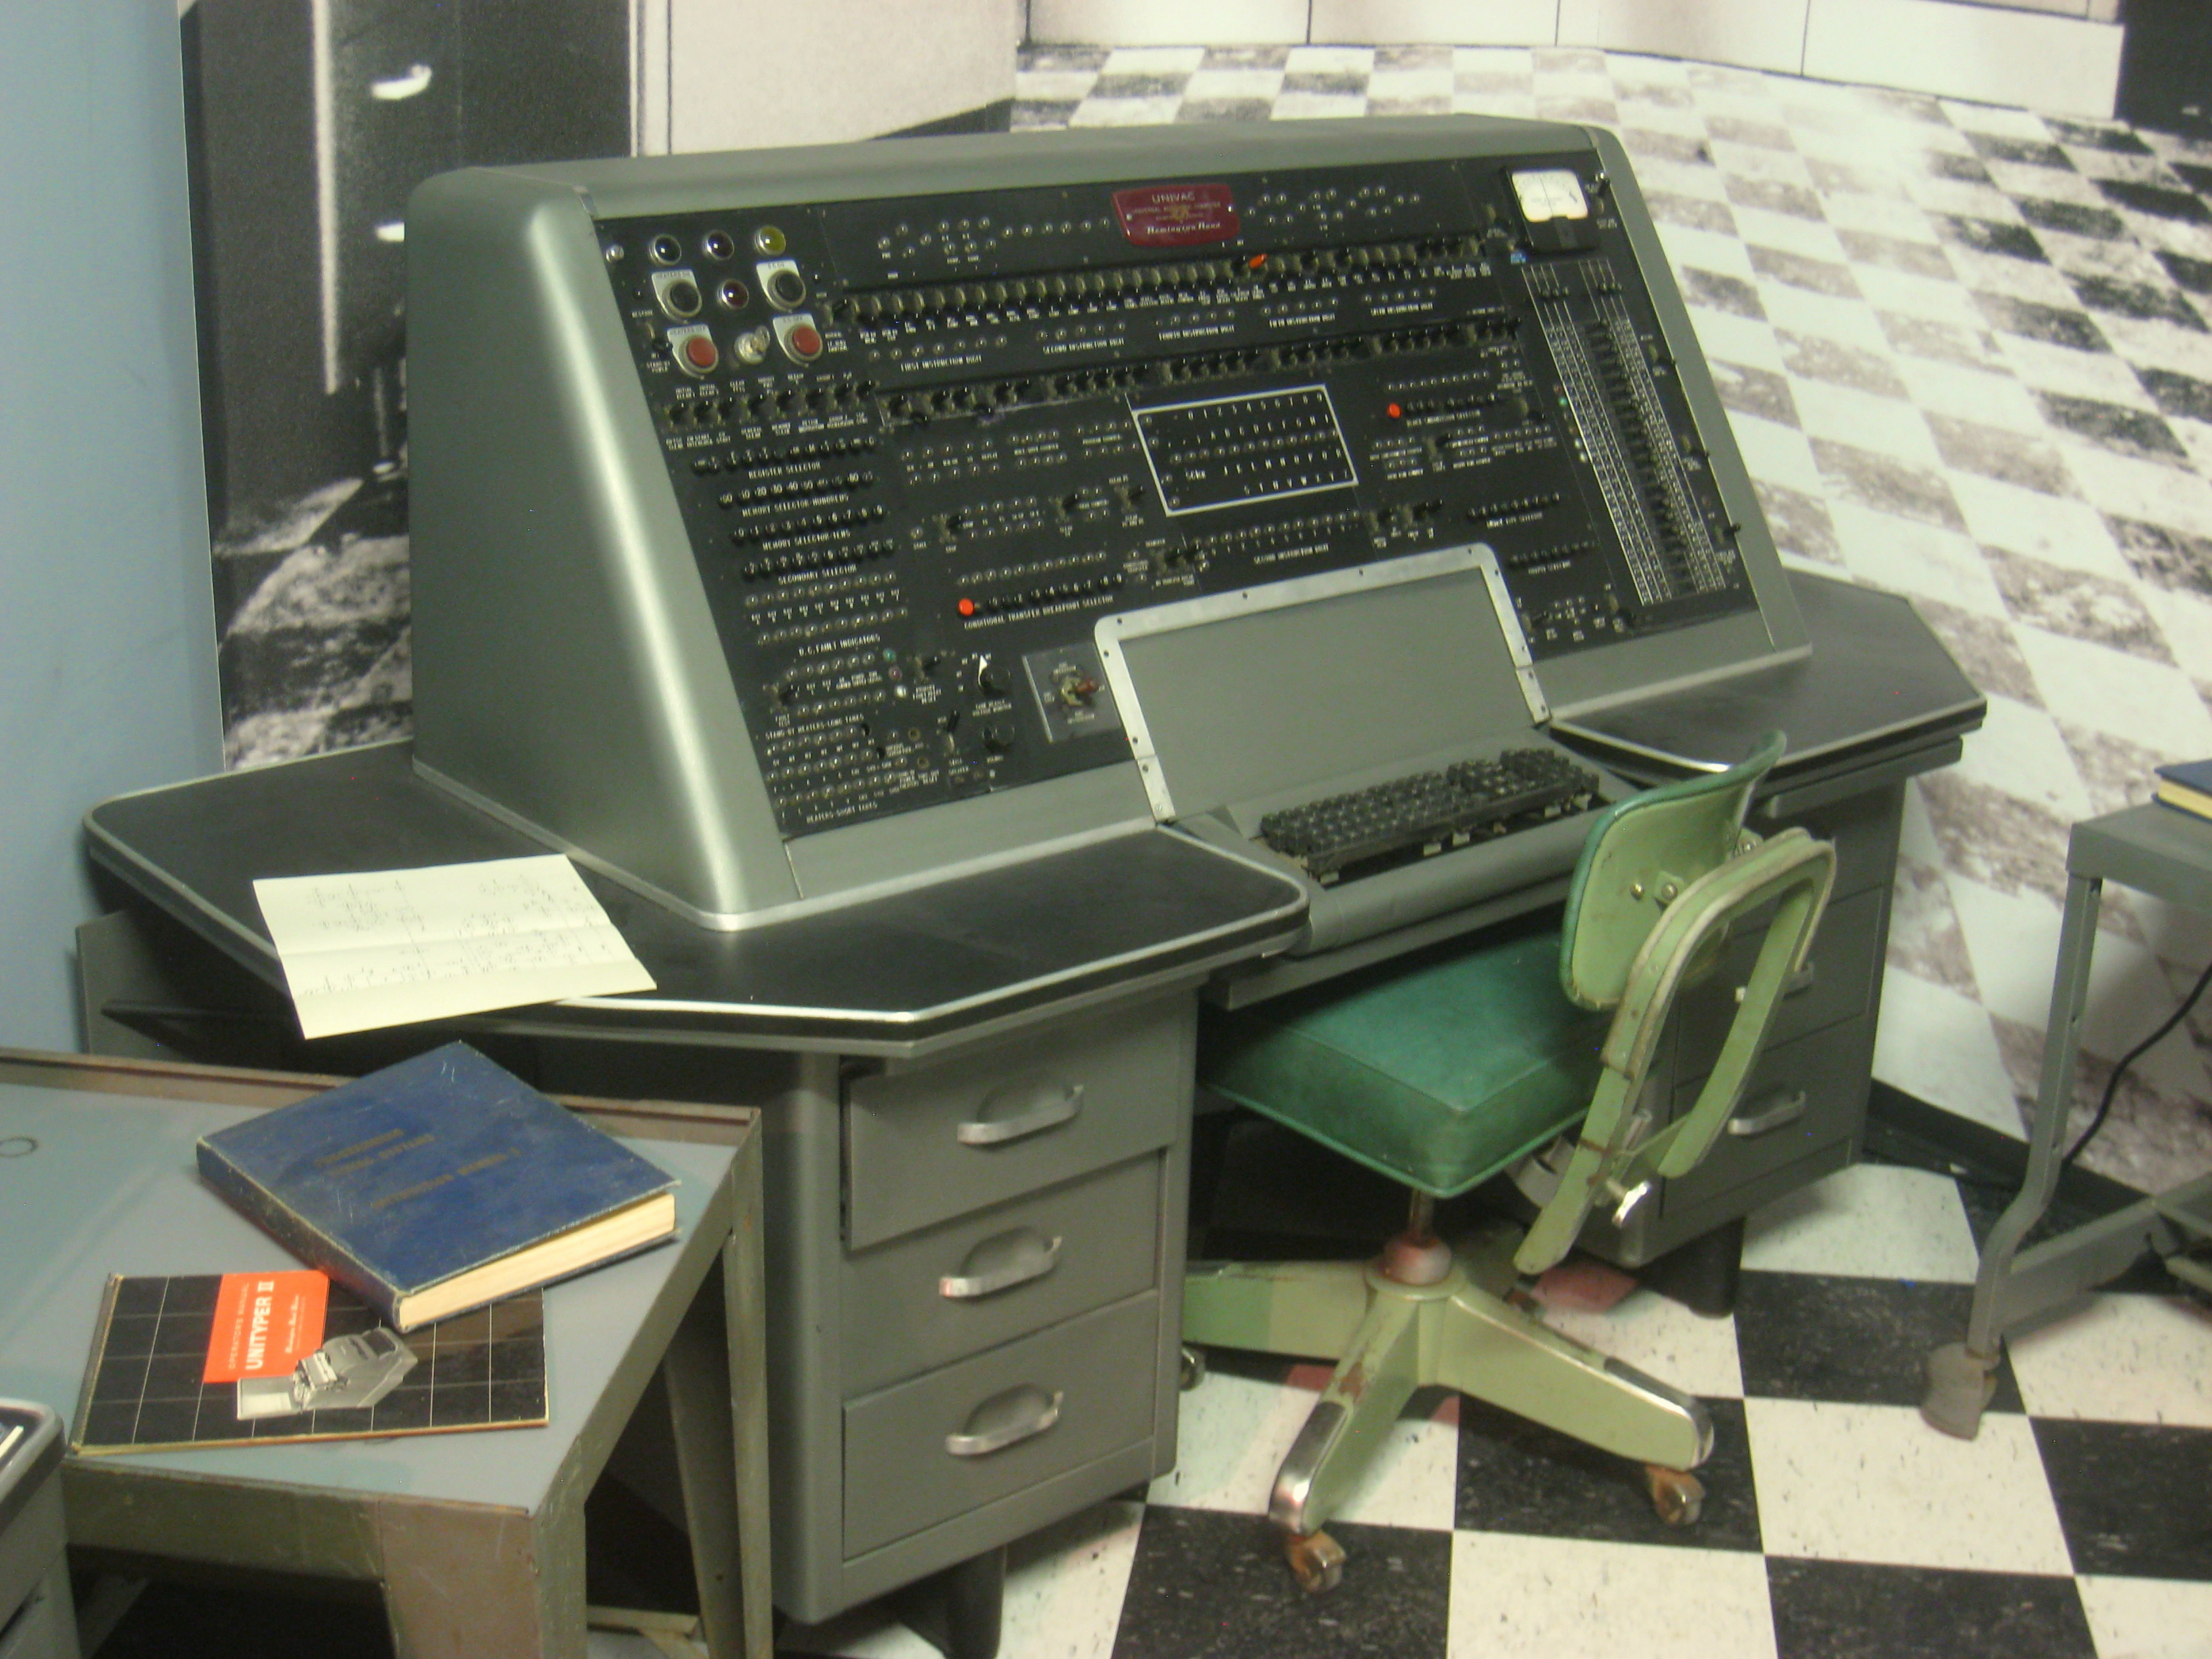 Console of a UNIVAC computer